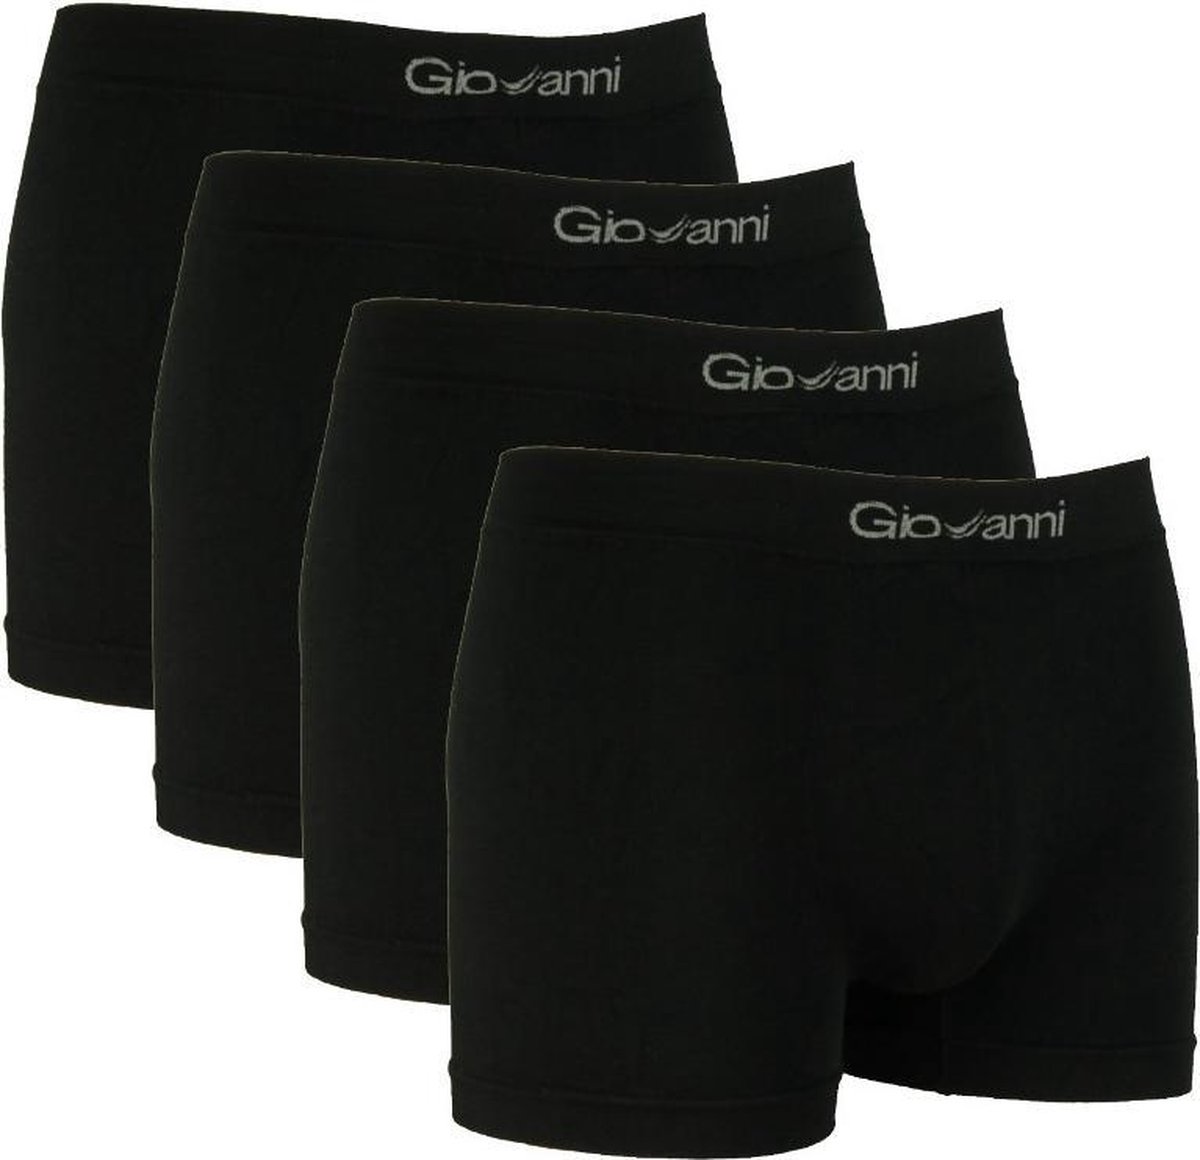 Giovanni heren boxershorts 'Naadloos Pakket' zwart maat M 4-Pack | bol.com